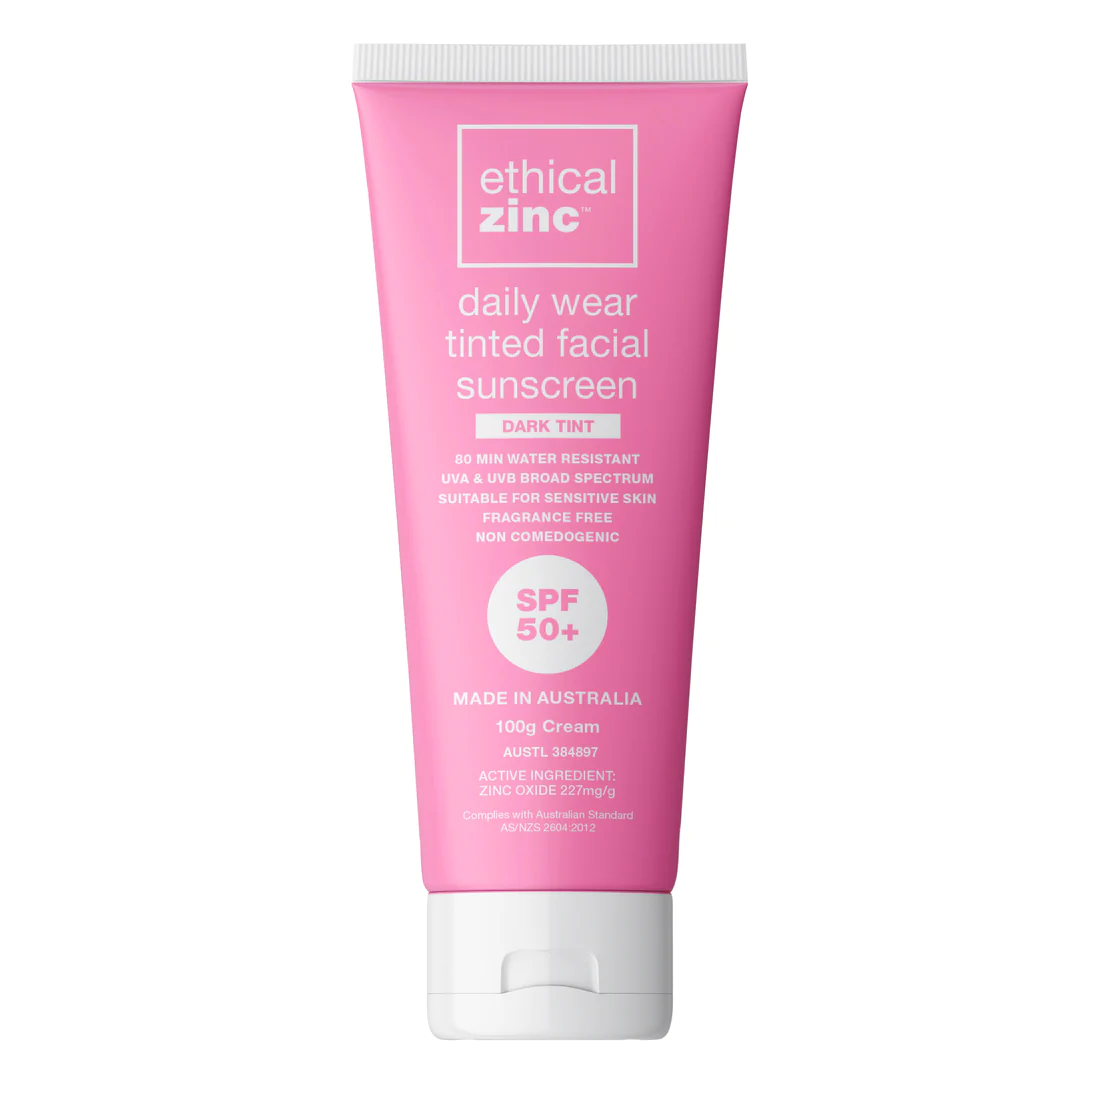 Ethical Zinc SPF50+ Daily Wear Tinted Facial Sunscreen 100g, Dark Tint